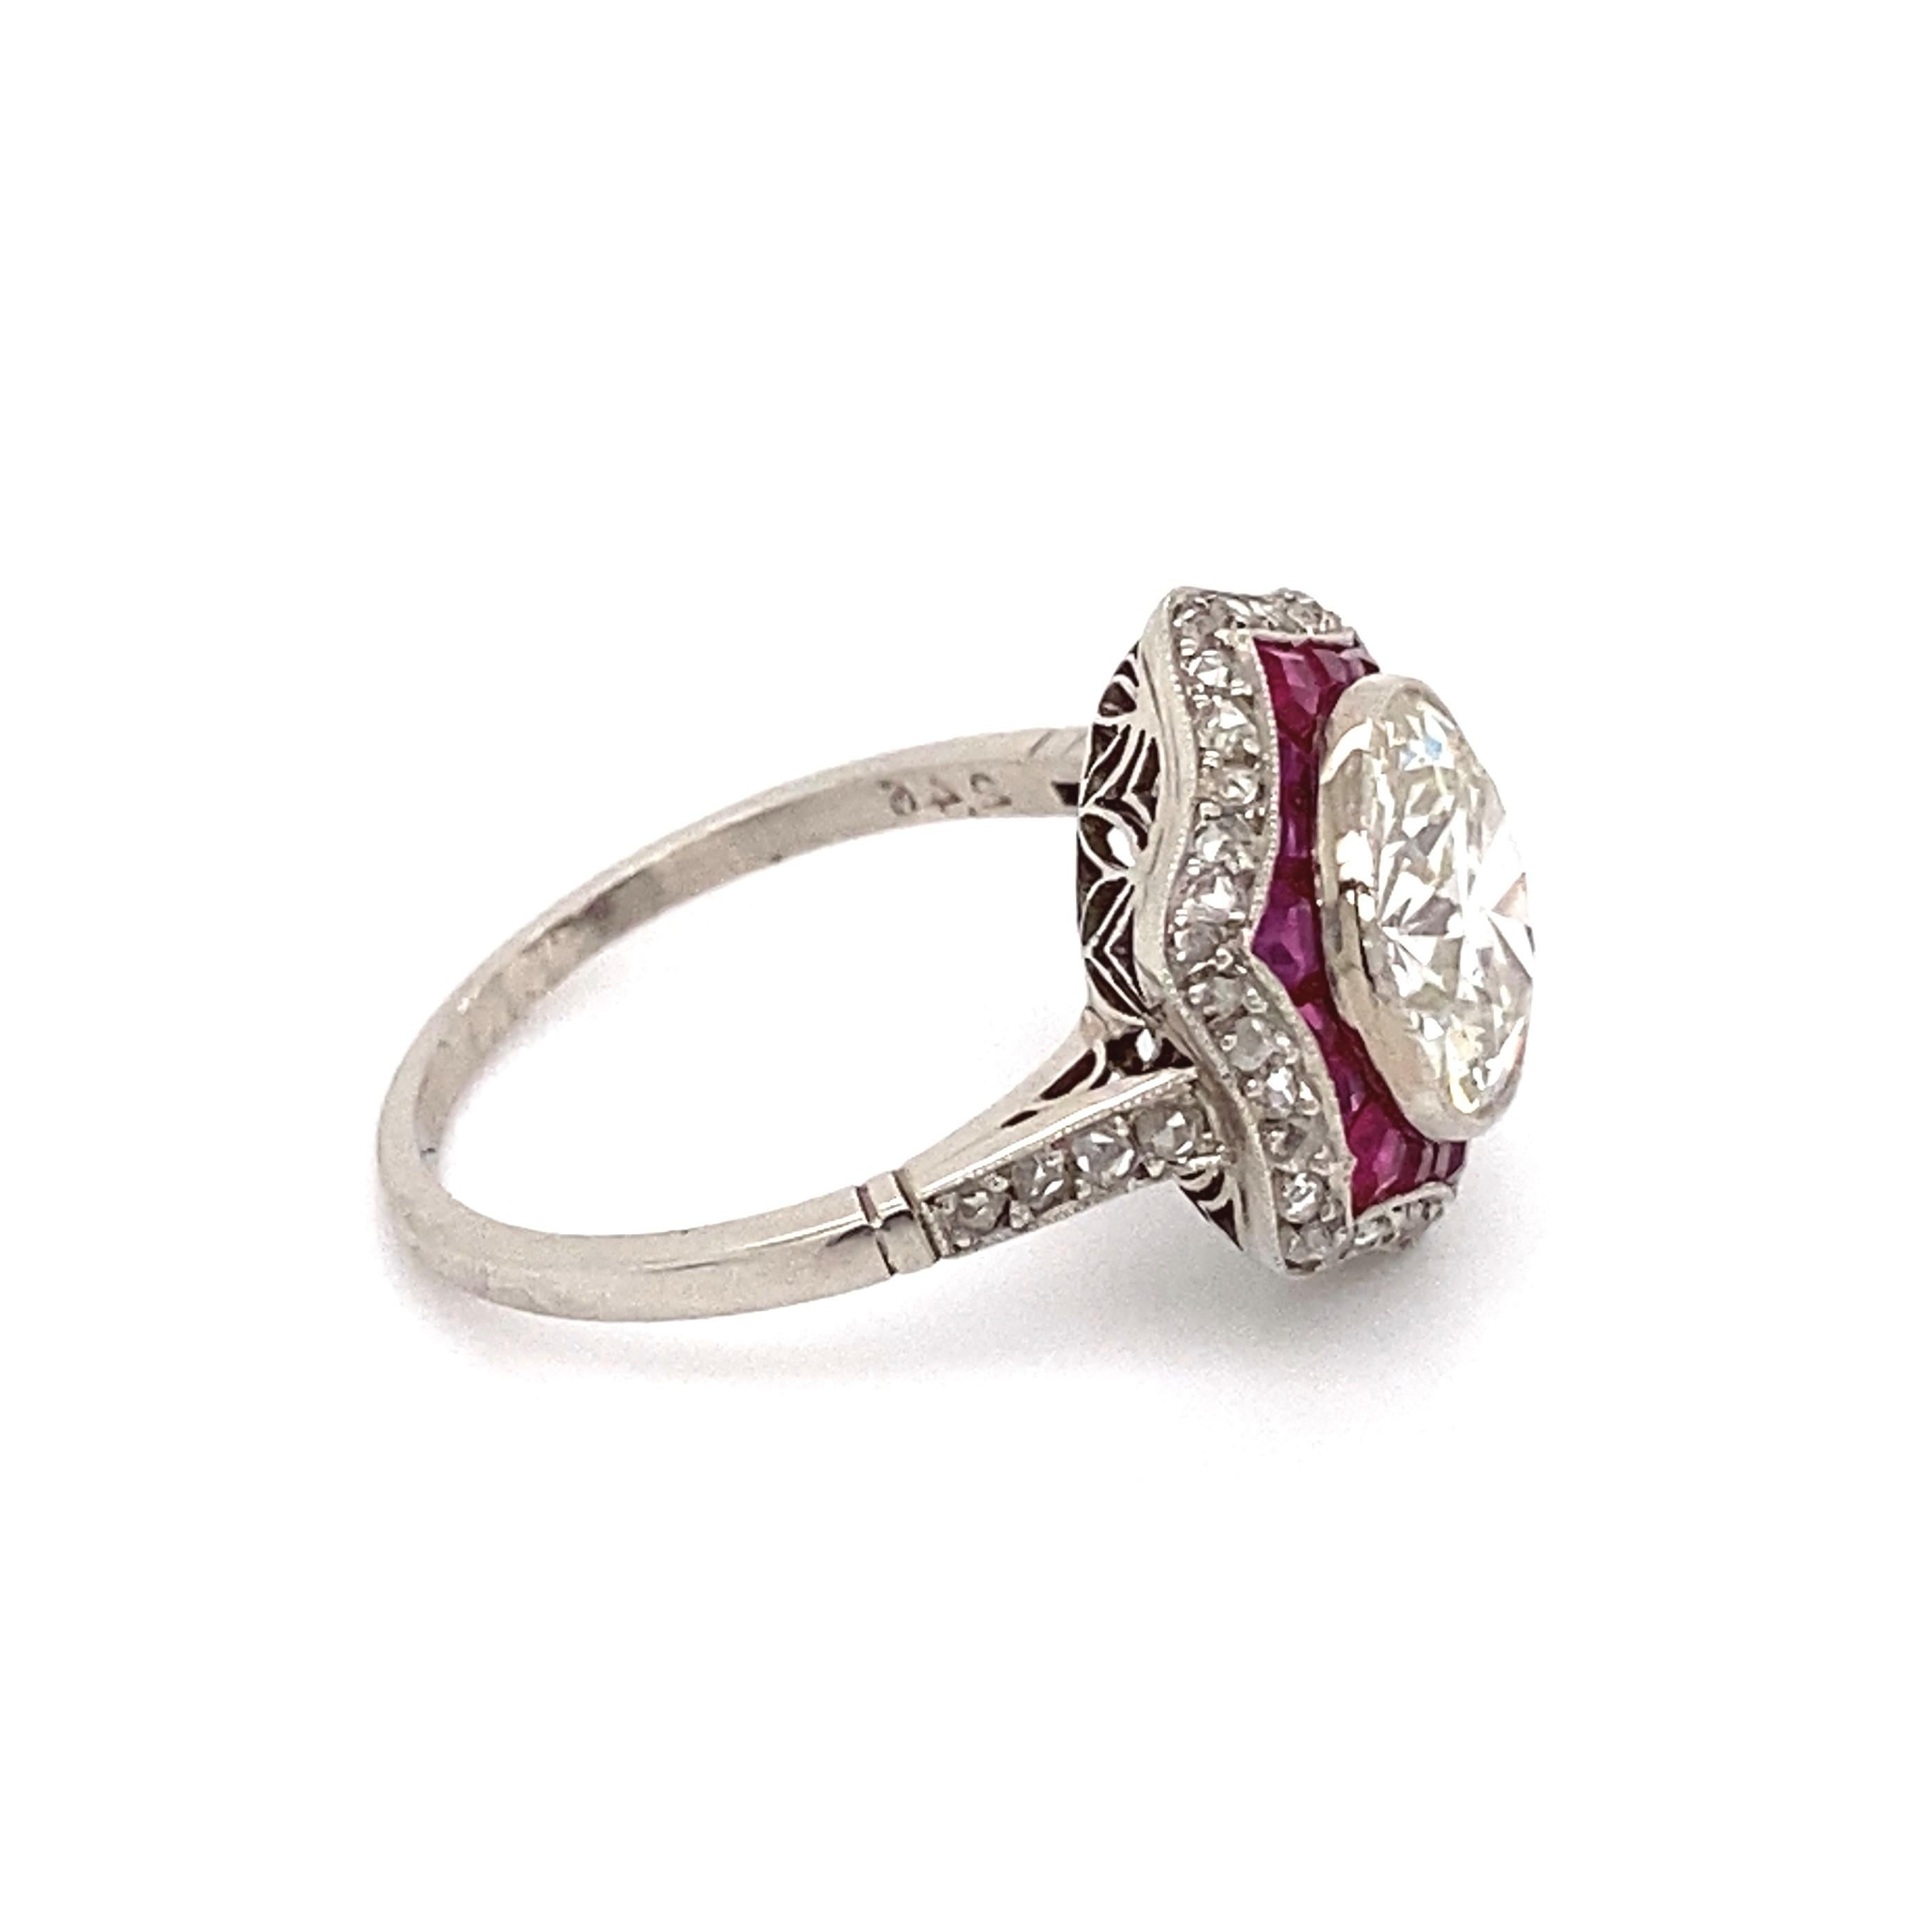 Women's Art Deco Revival Old European Diamond Ruby and Diamond Surround Platinum Ring